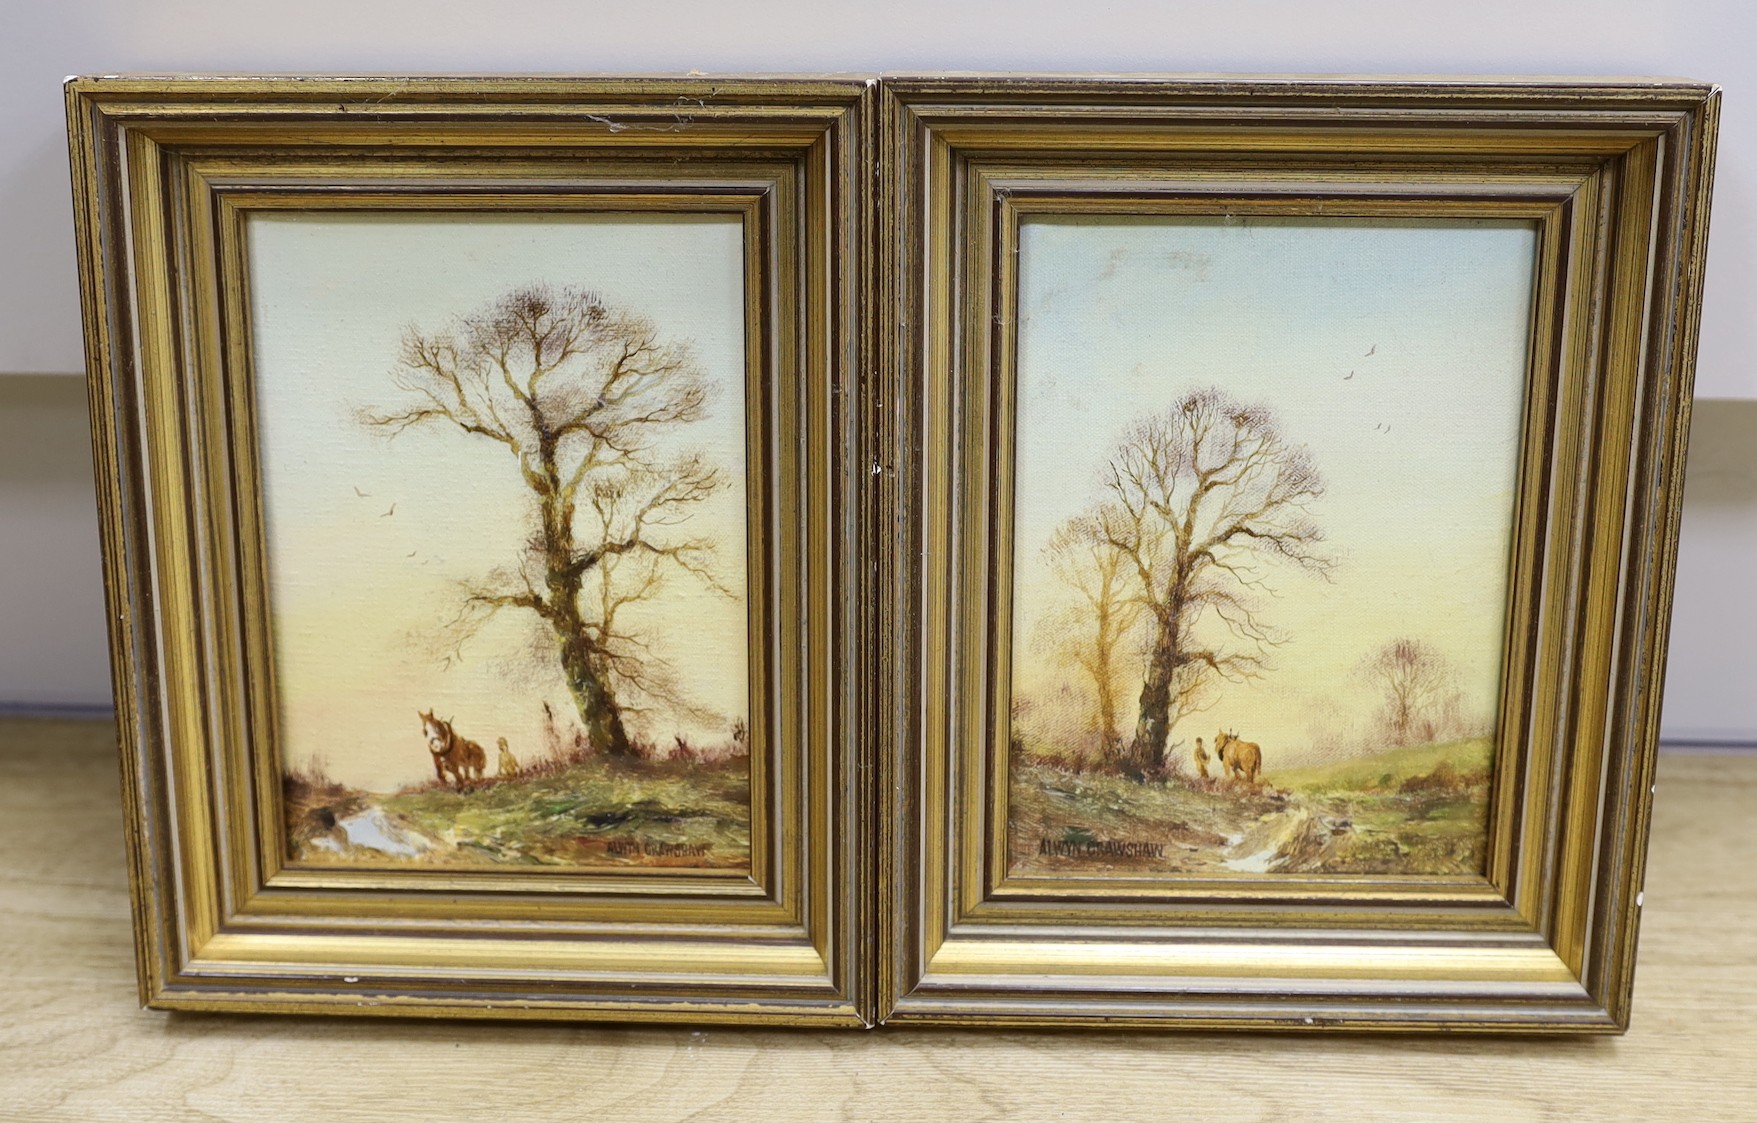 Alwyn Crawshaw (b.1934), pair of oils on canvas, Ploughing scenes, signed, 17 x 12cm